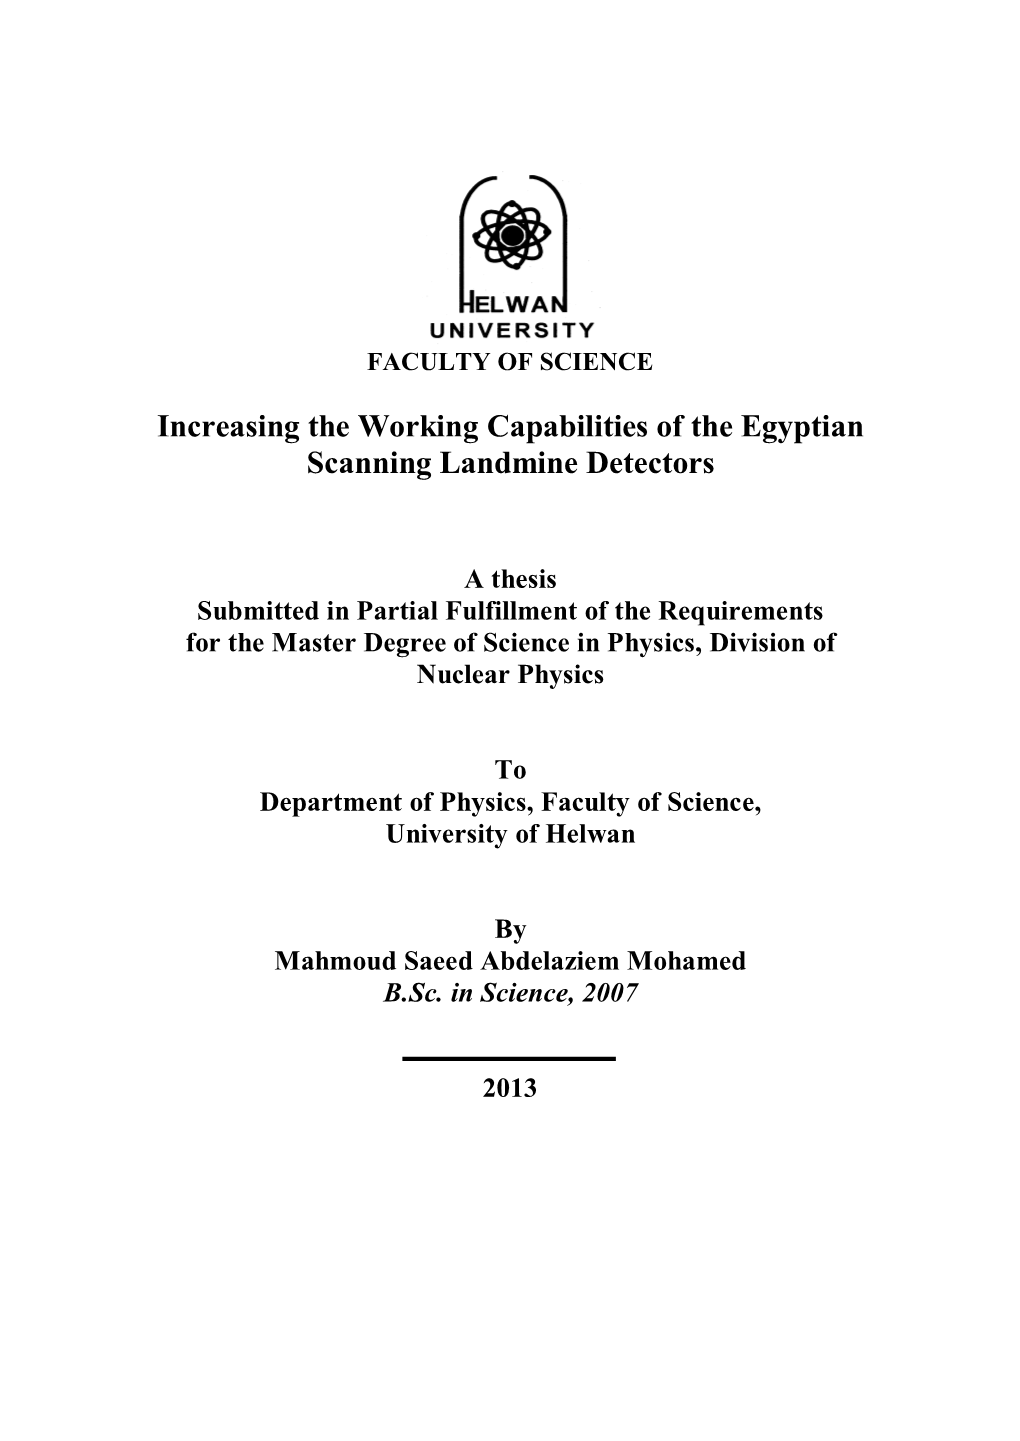 Increasing the Working Capabilities of the Egyptian Scanning Landmine Detectors